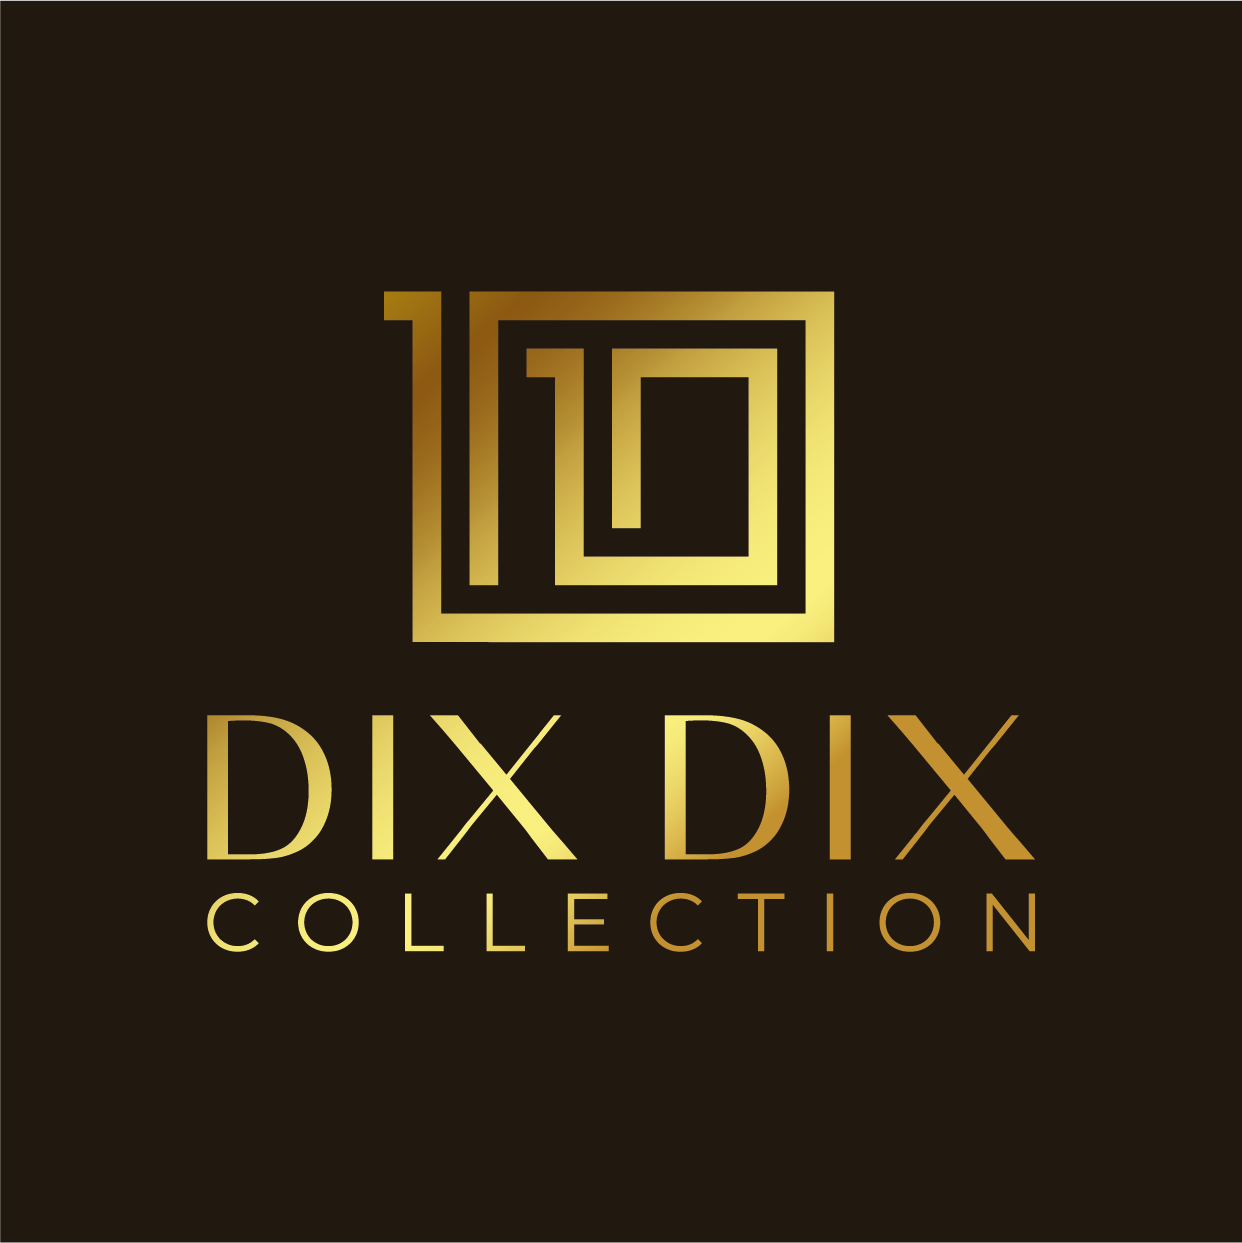 DIX DIX collection